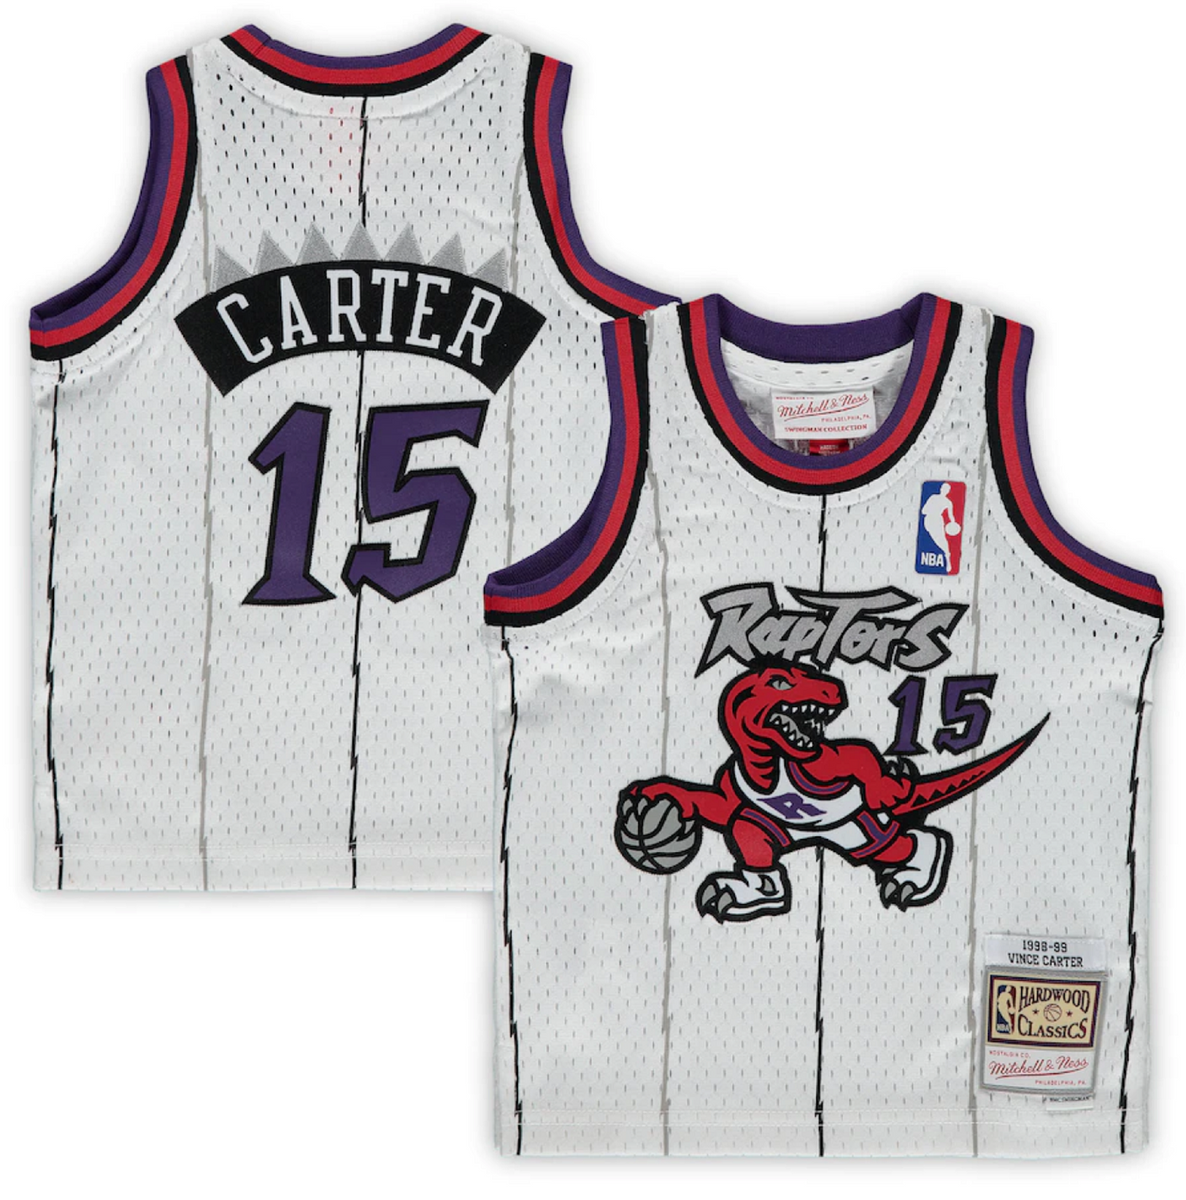 Toronto Raptors #15 Vince Carter Retro Jersey 1998-99